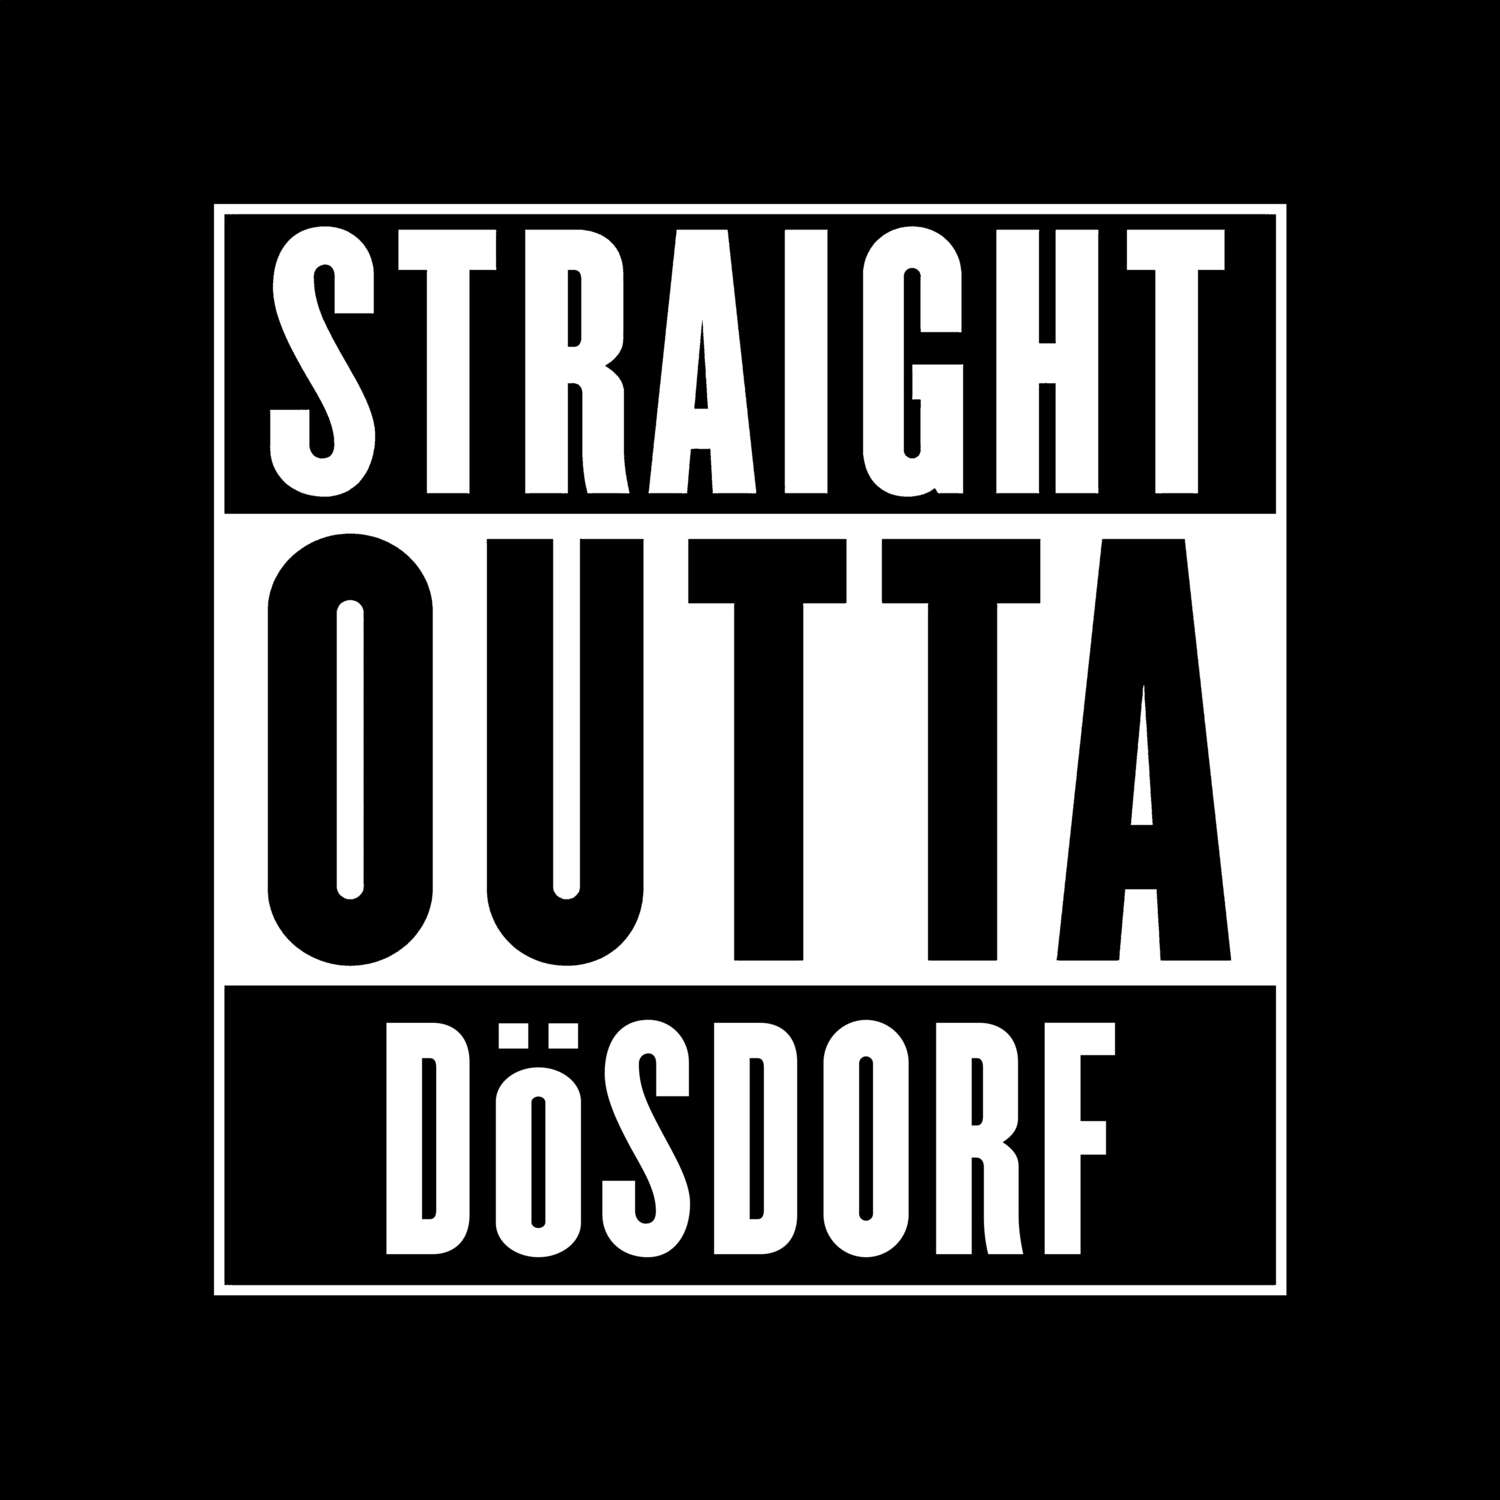 Dösdorf T-Shirt »Straight Outta«